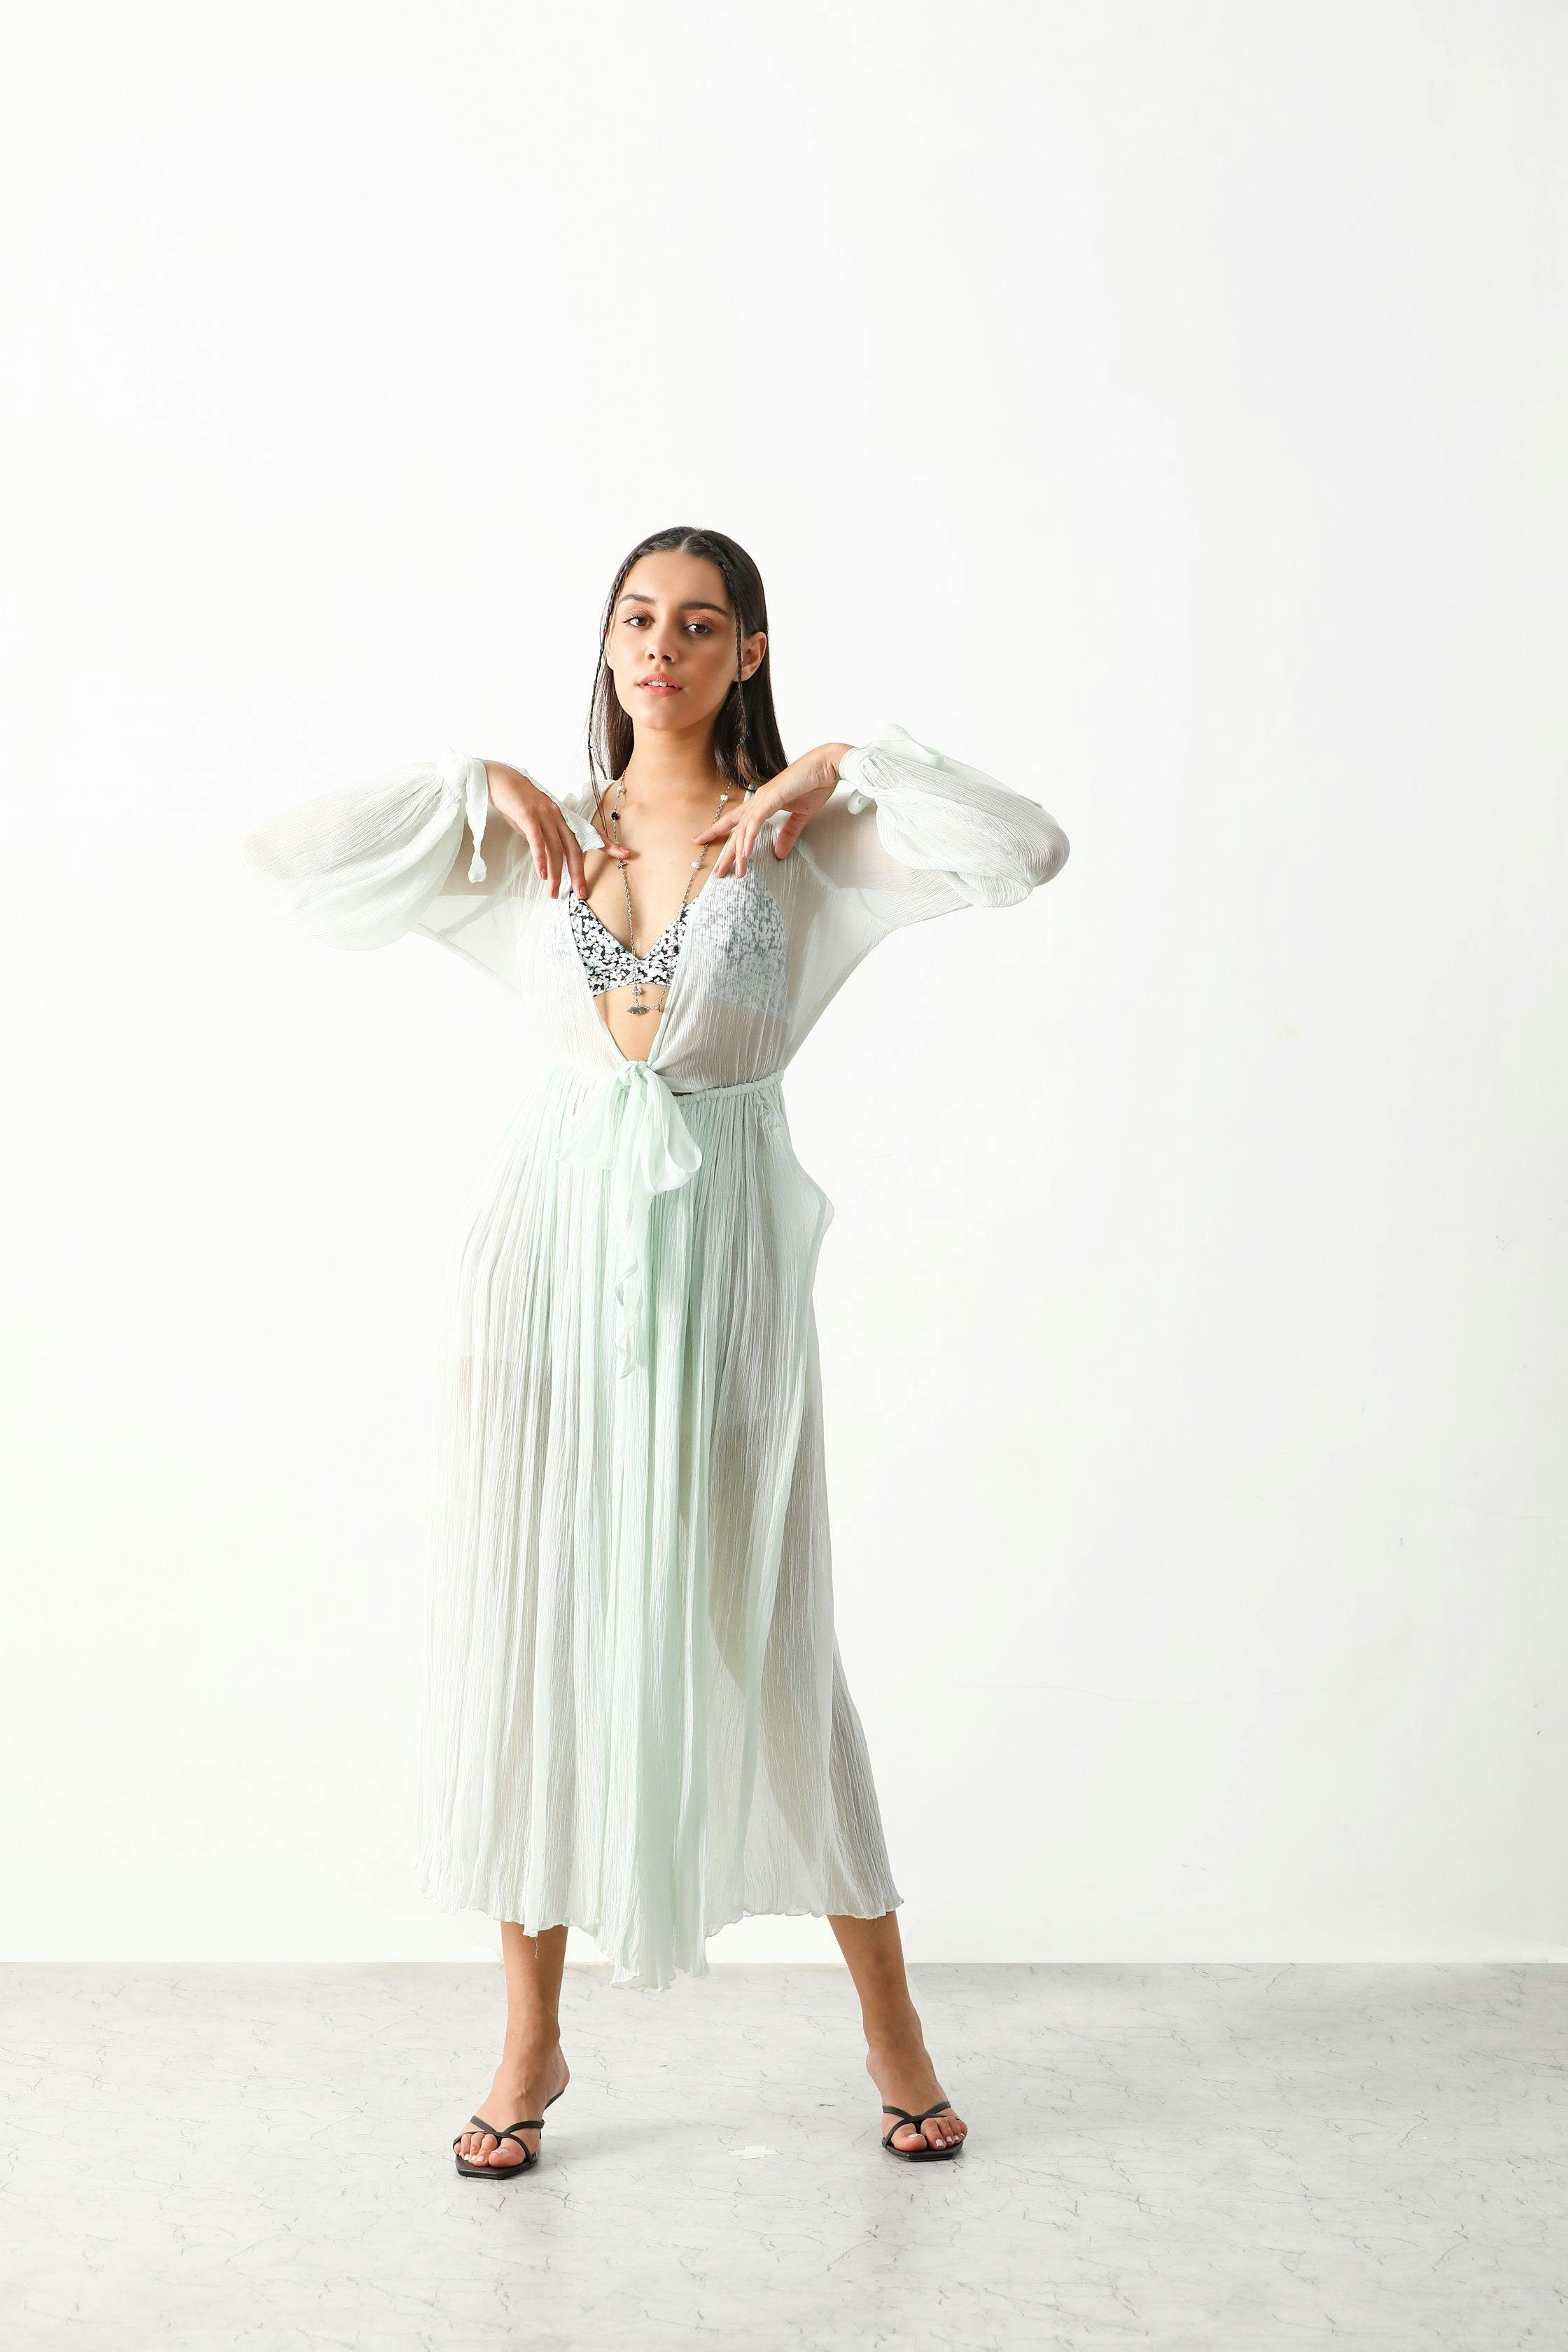 Thumbnail preview #0 for Alondra Beach Dress